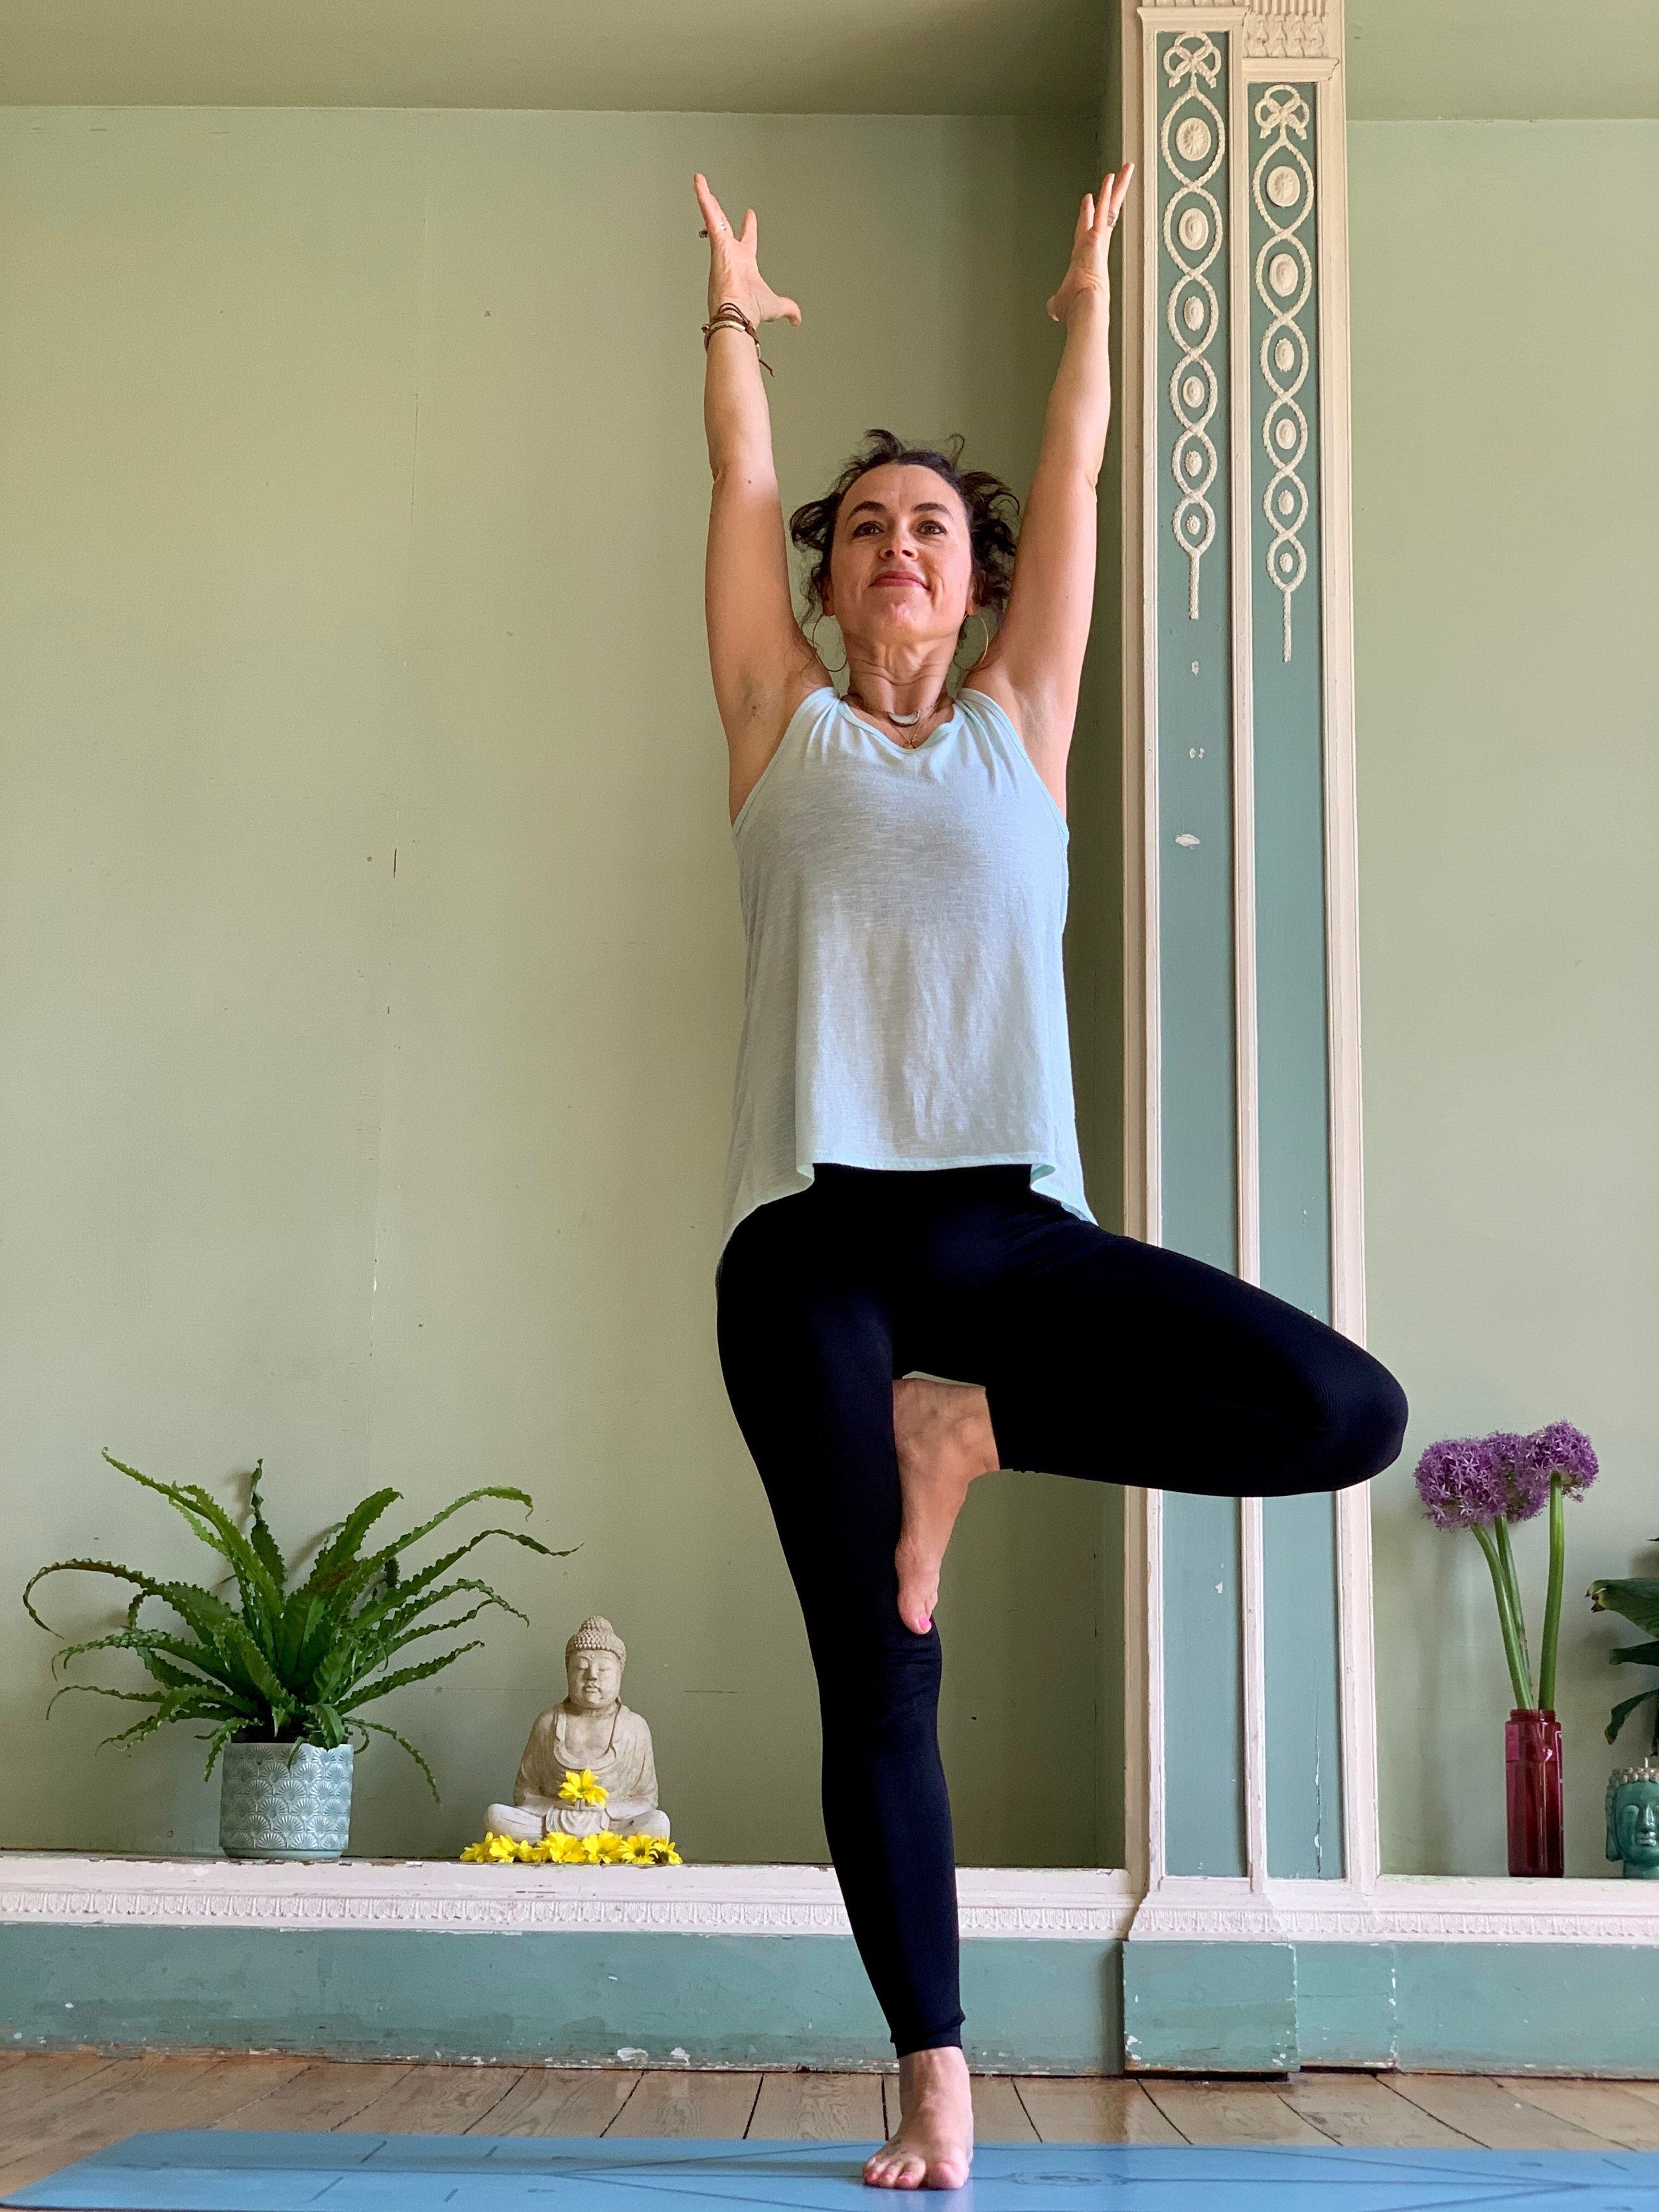 Yoga Standing Balancing Poses: Tips and Exercises 